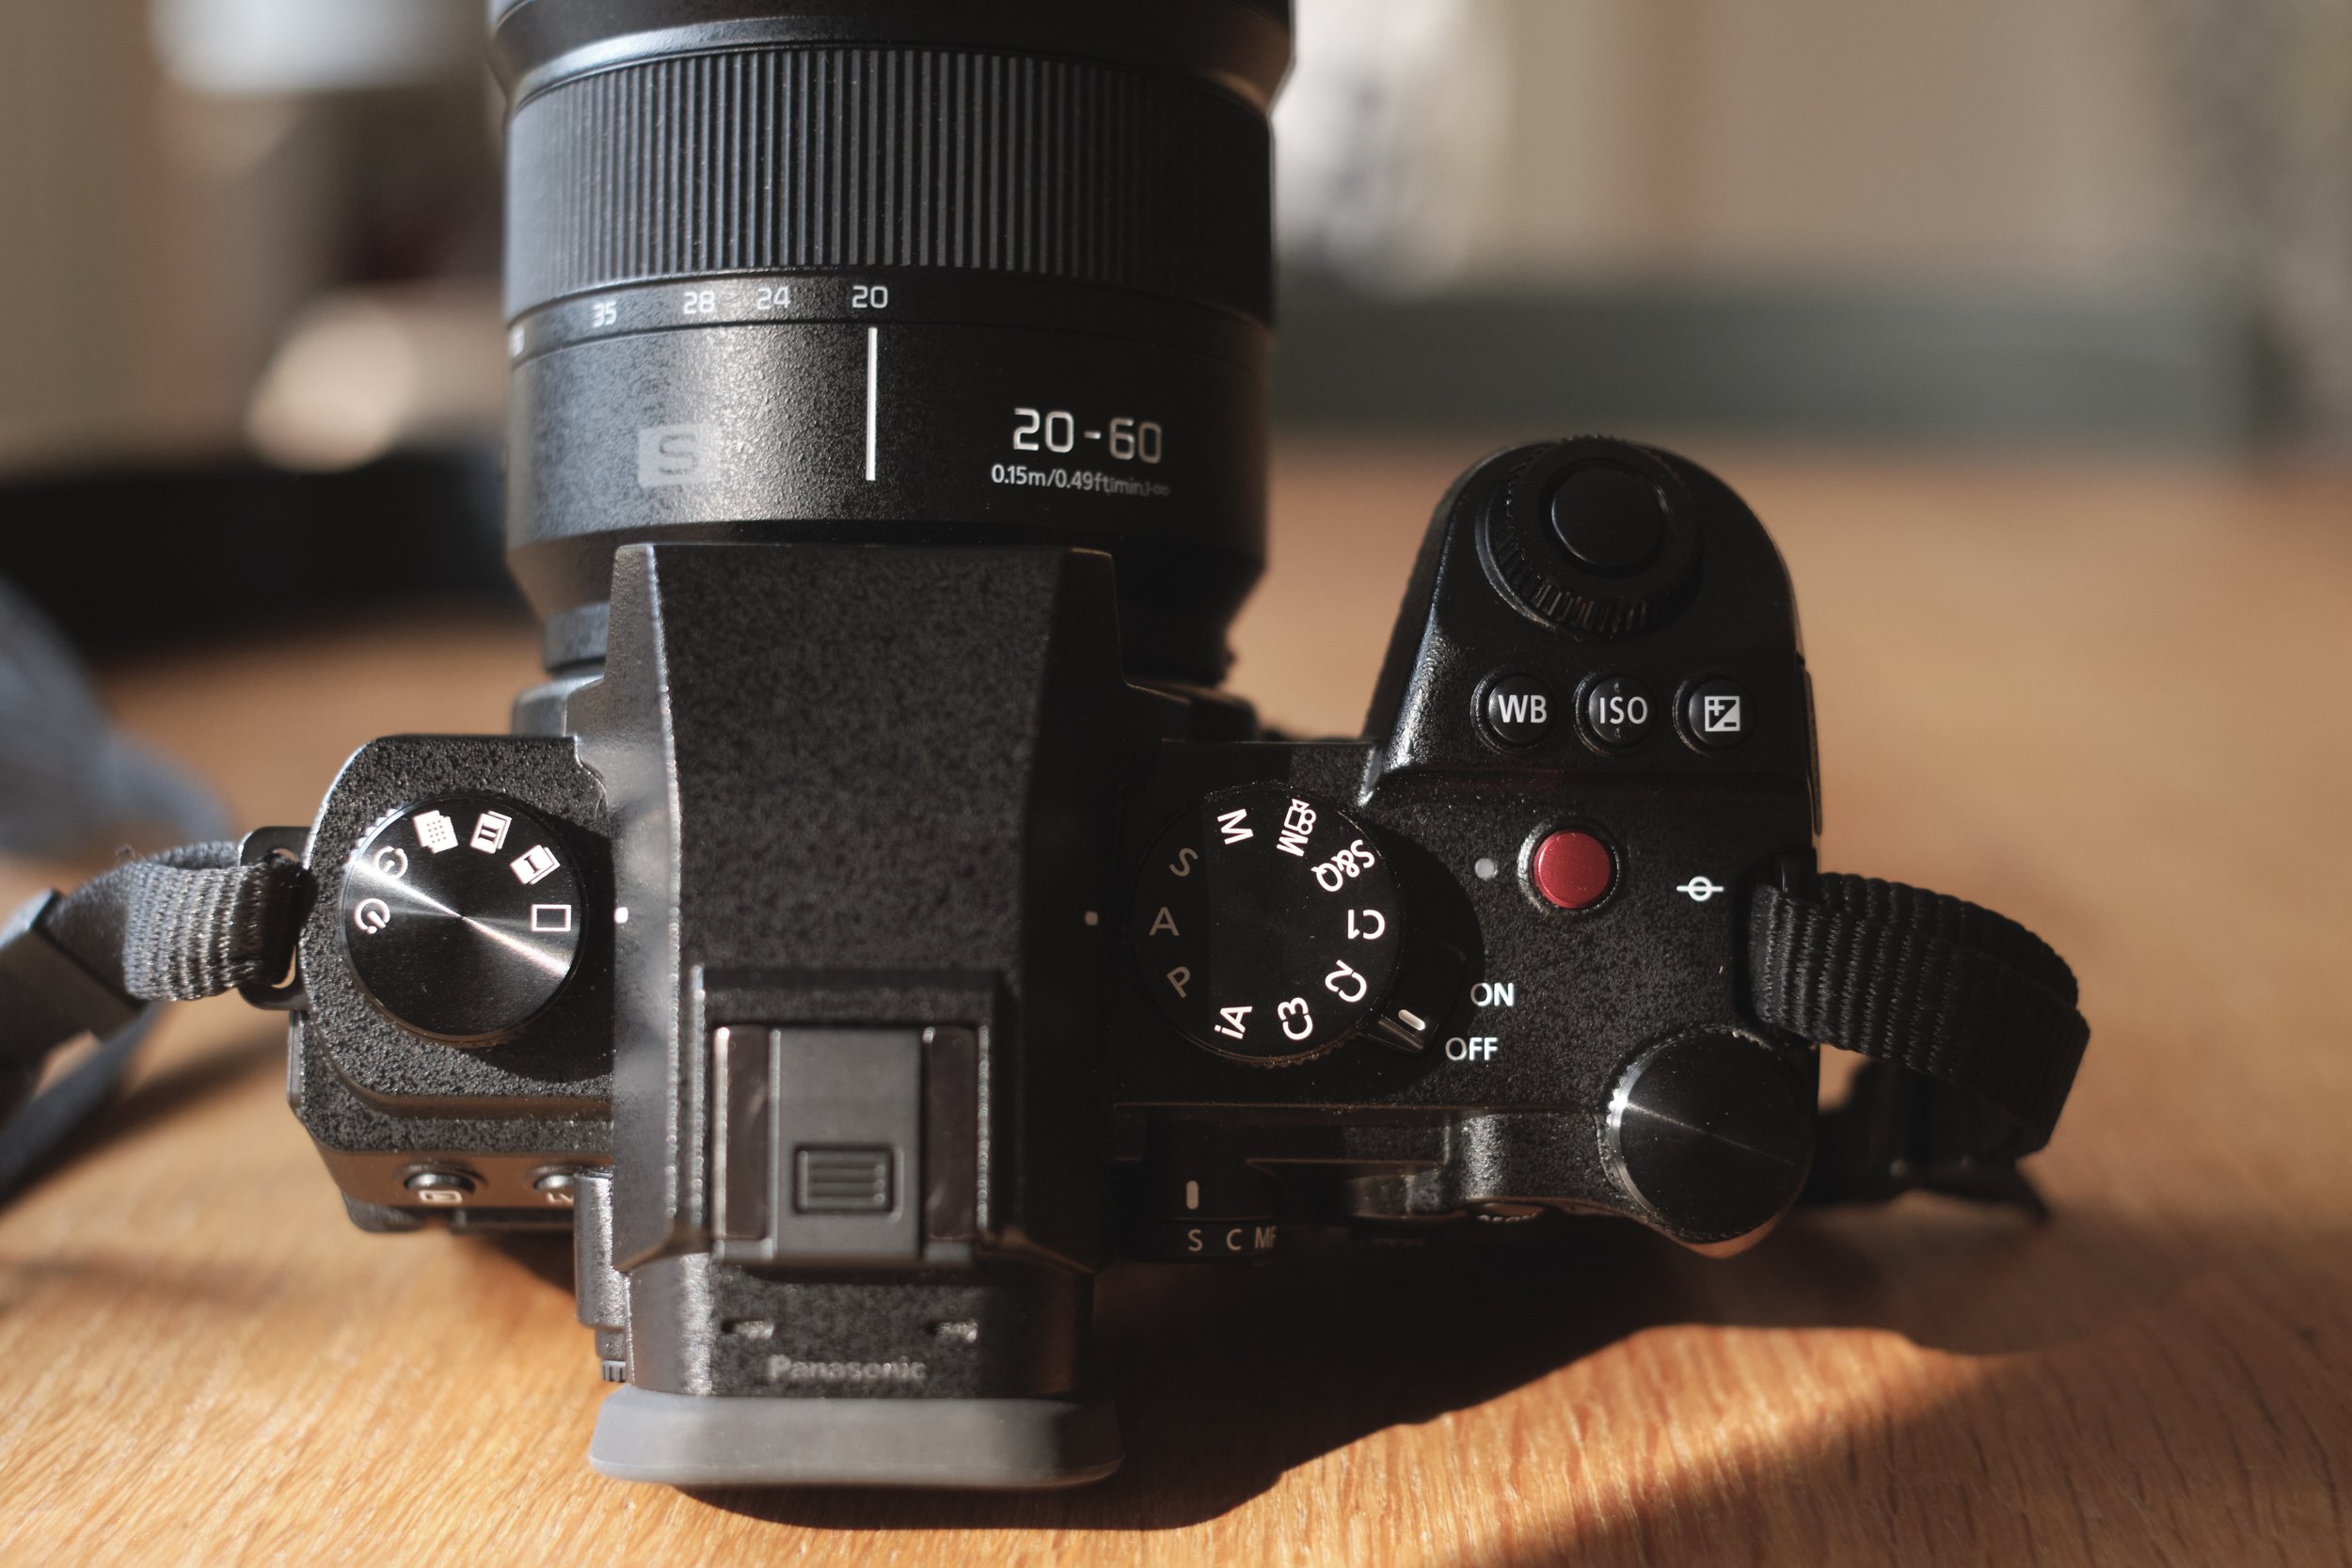 Panasonic S5 II Review: Unbeatable Value - Photography Blog Tips